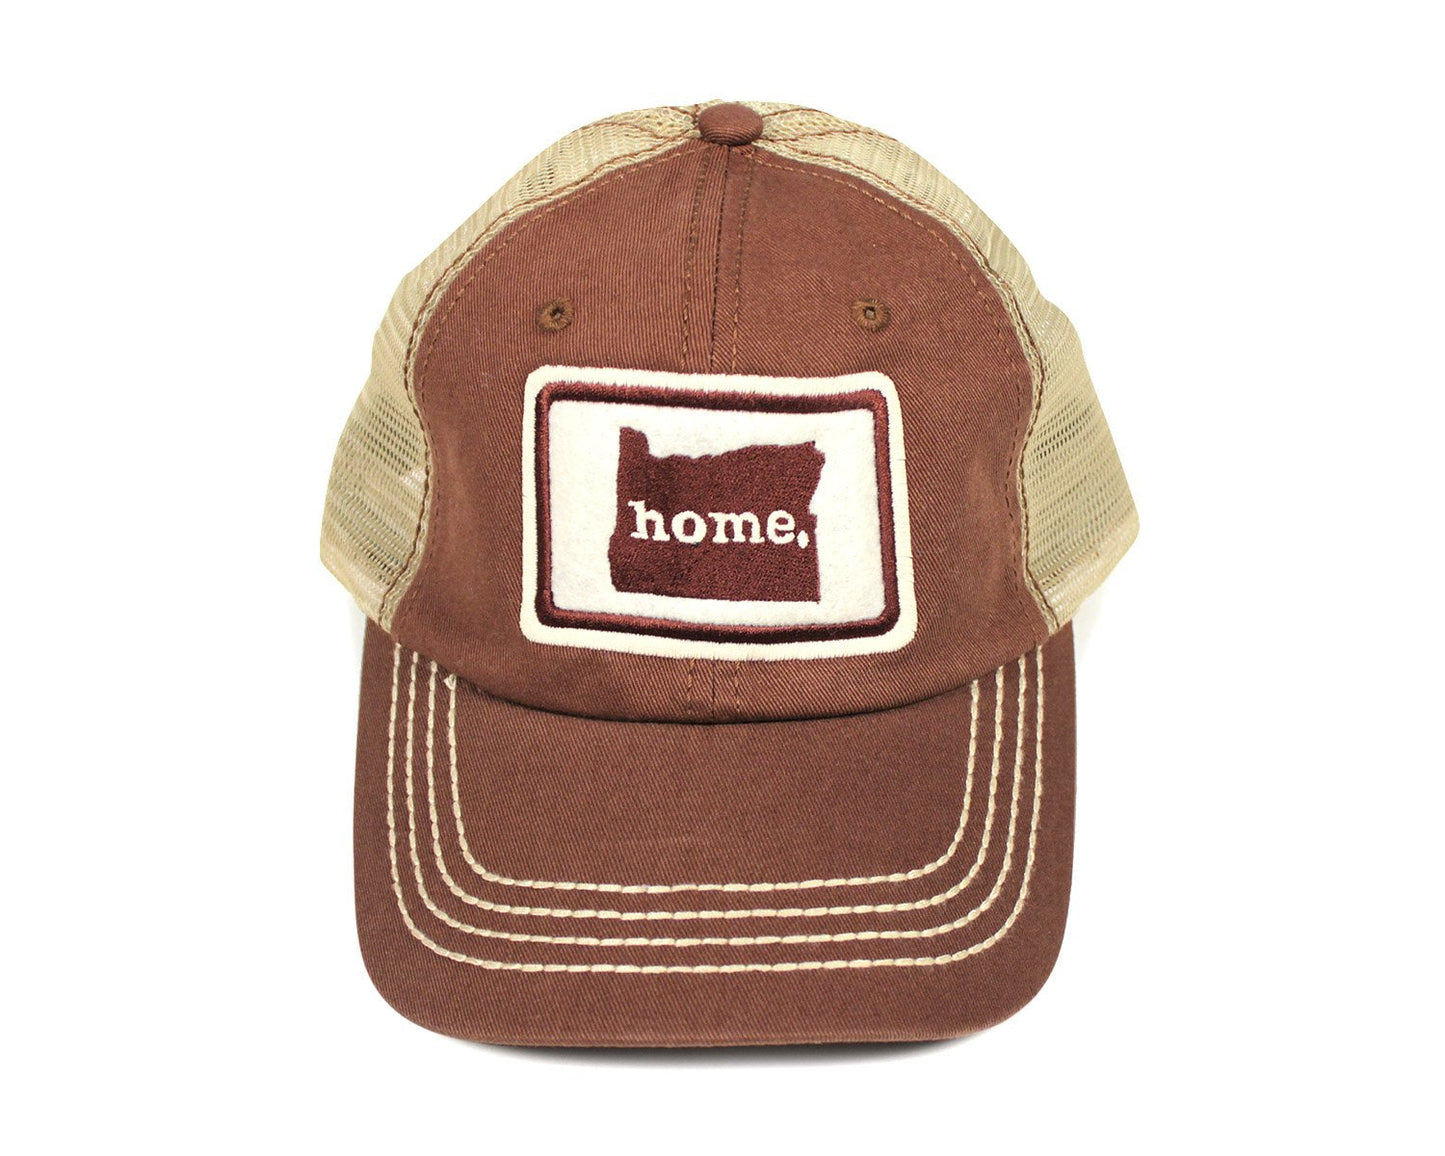 home. Mesh Hat - Michigan